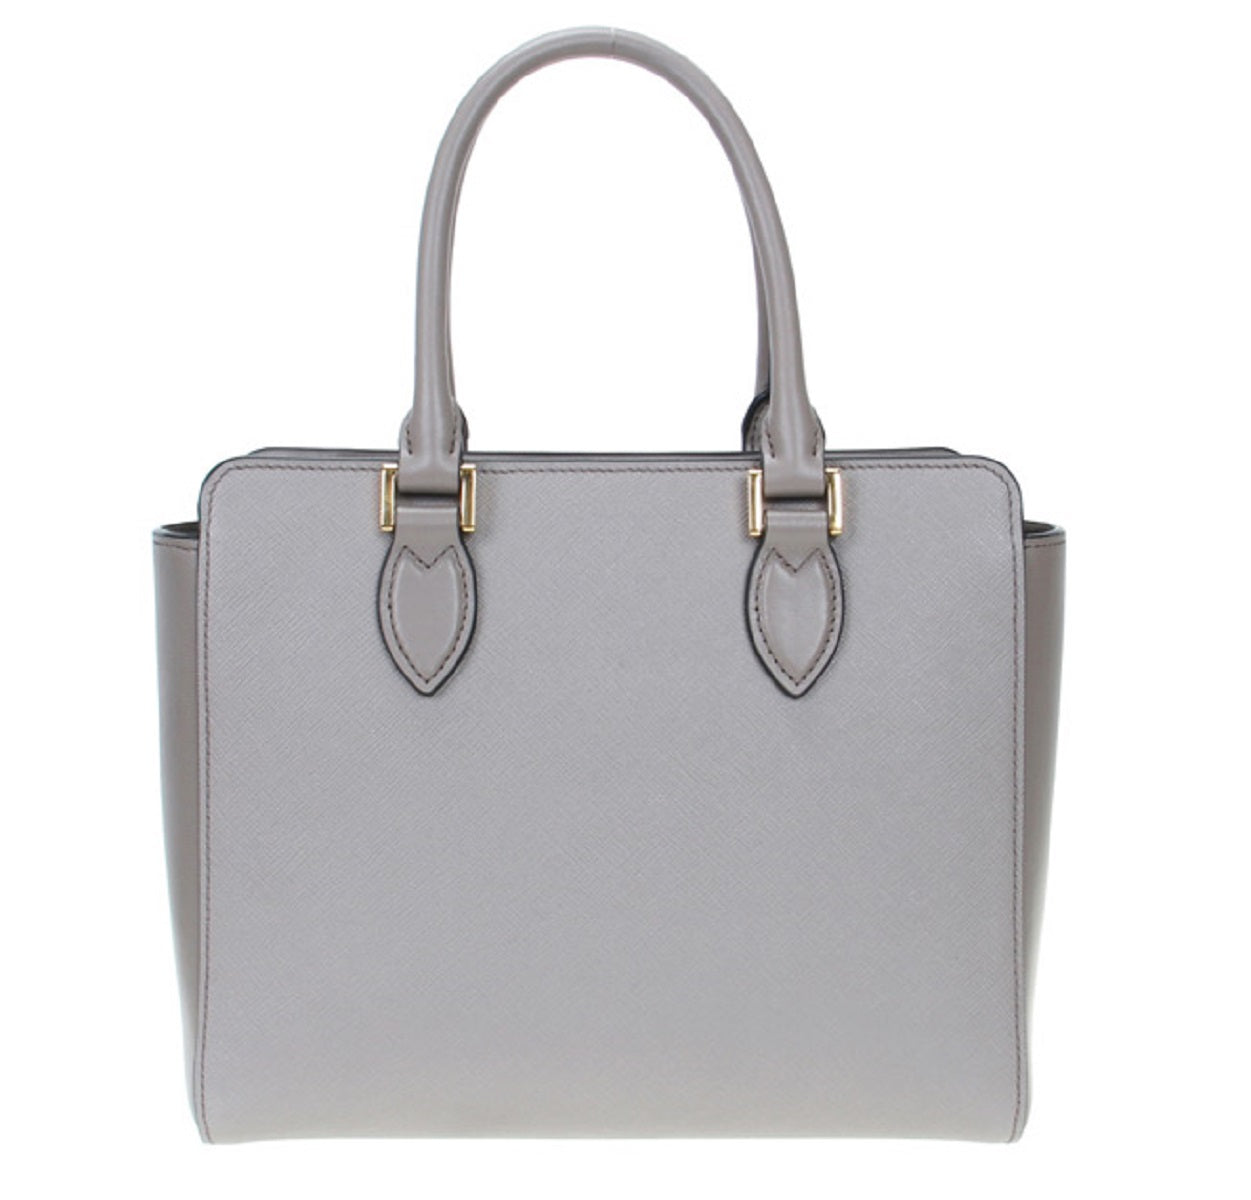 Prada Saffiano Leather Argilla Satchel Handbag